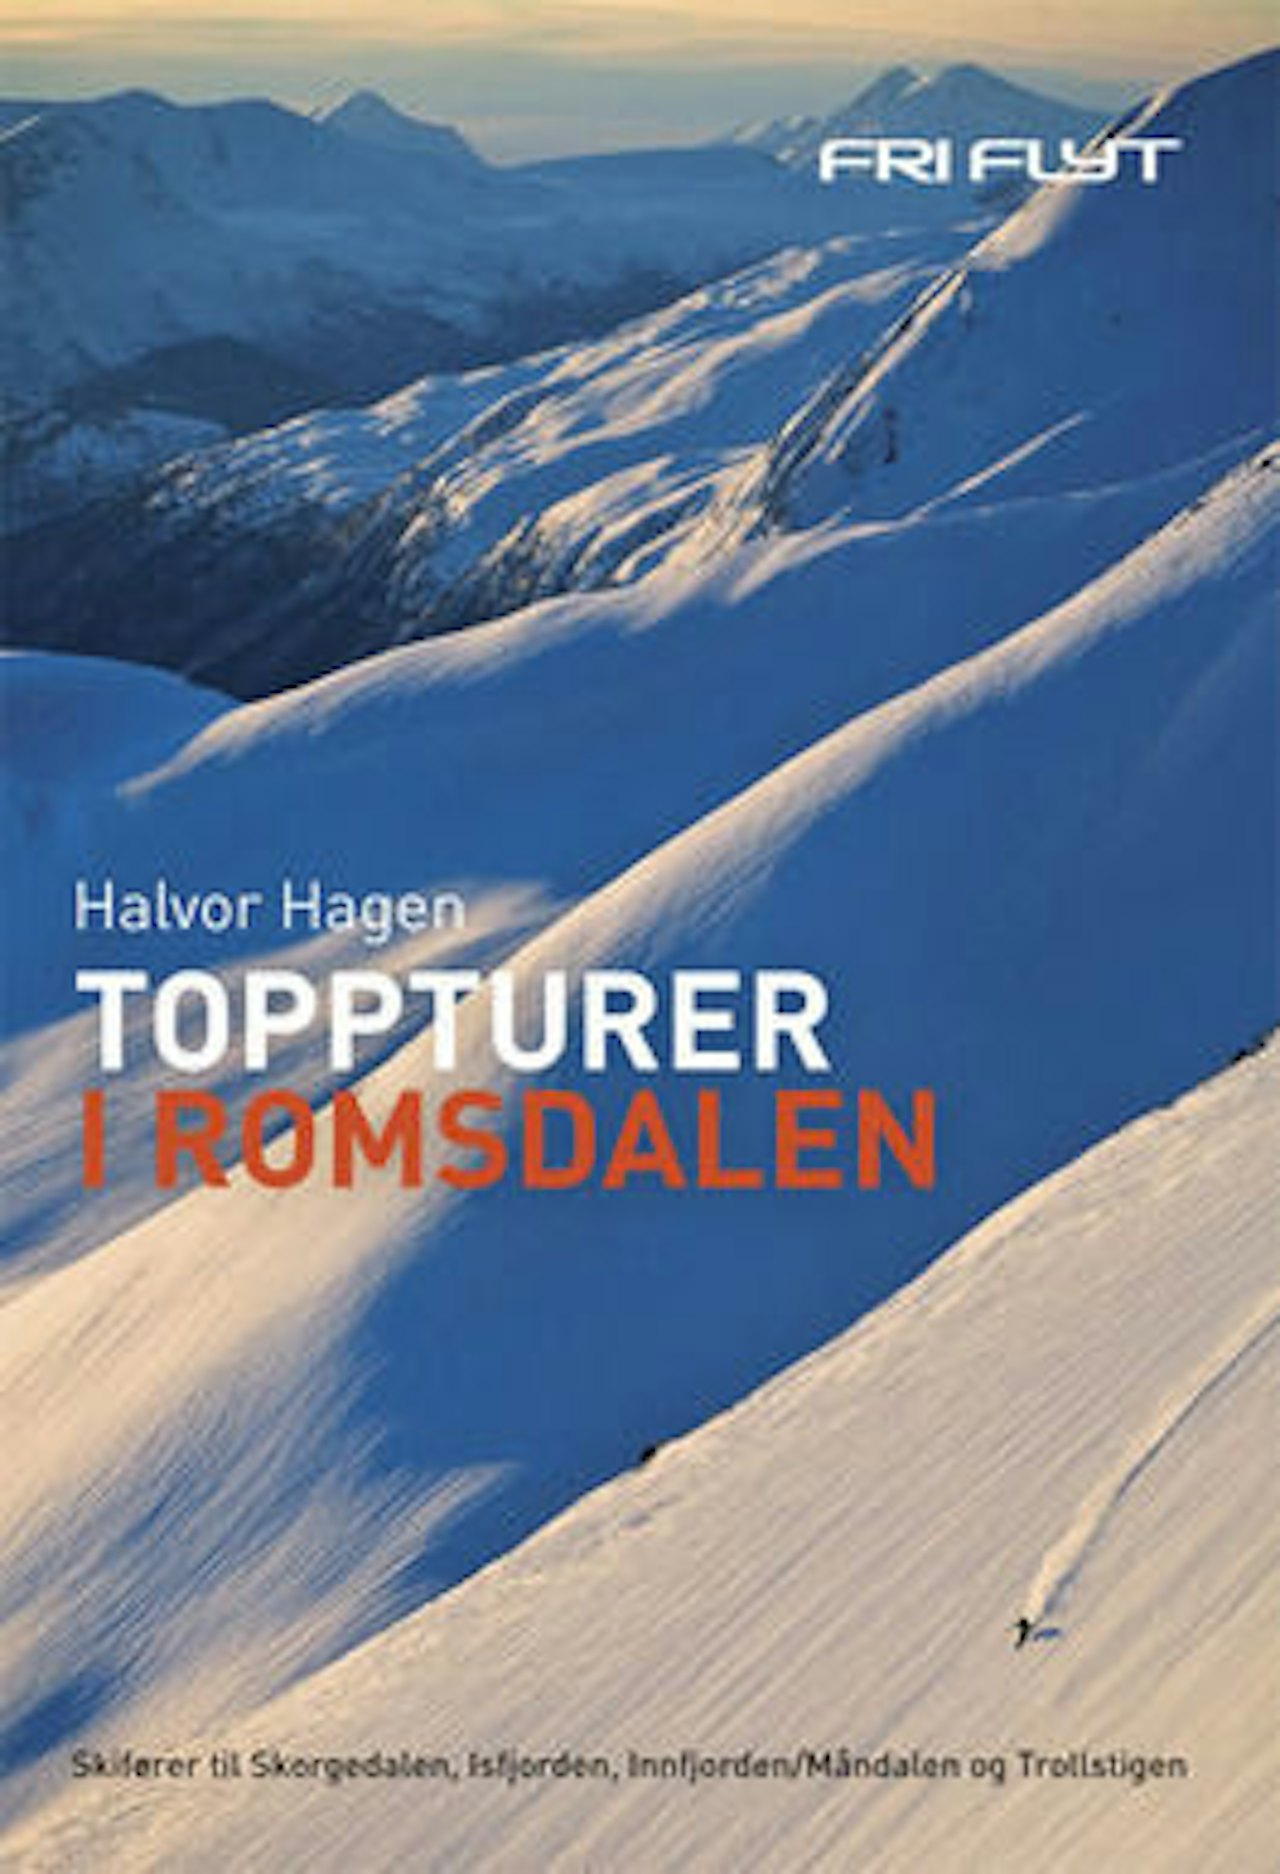 KRITIKERFAVORITT : Halvor Hagens nye skifører til Romsdalen.